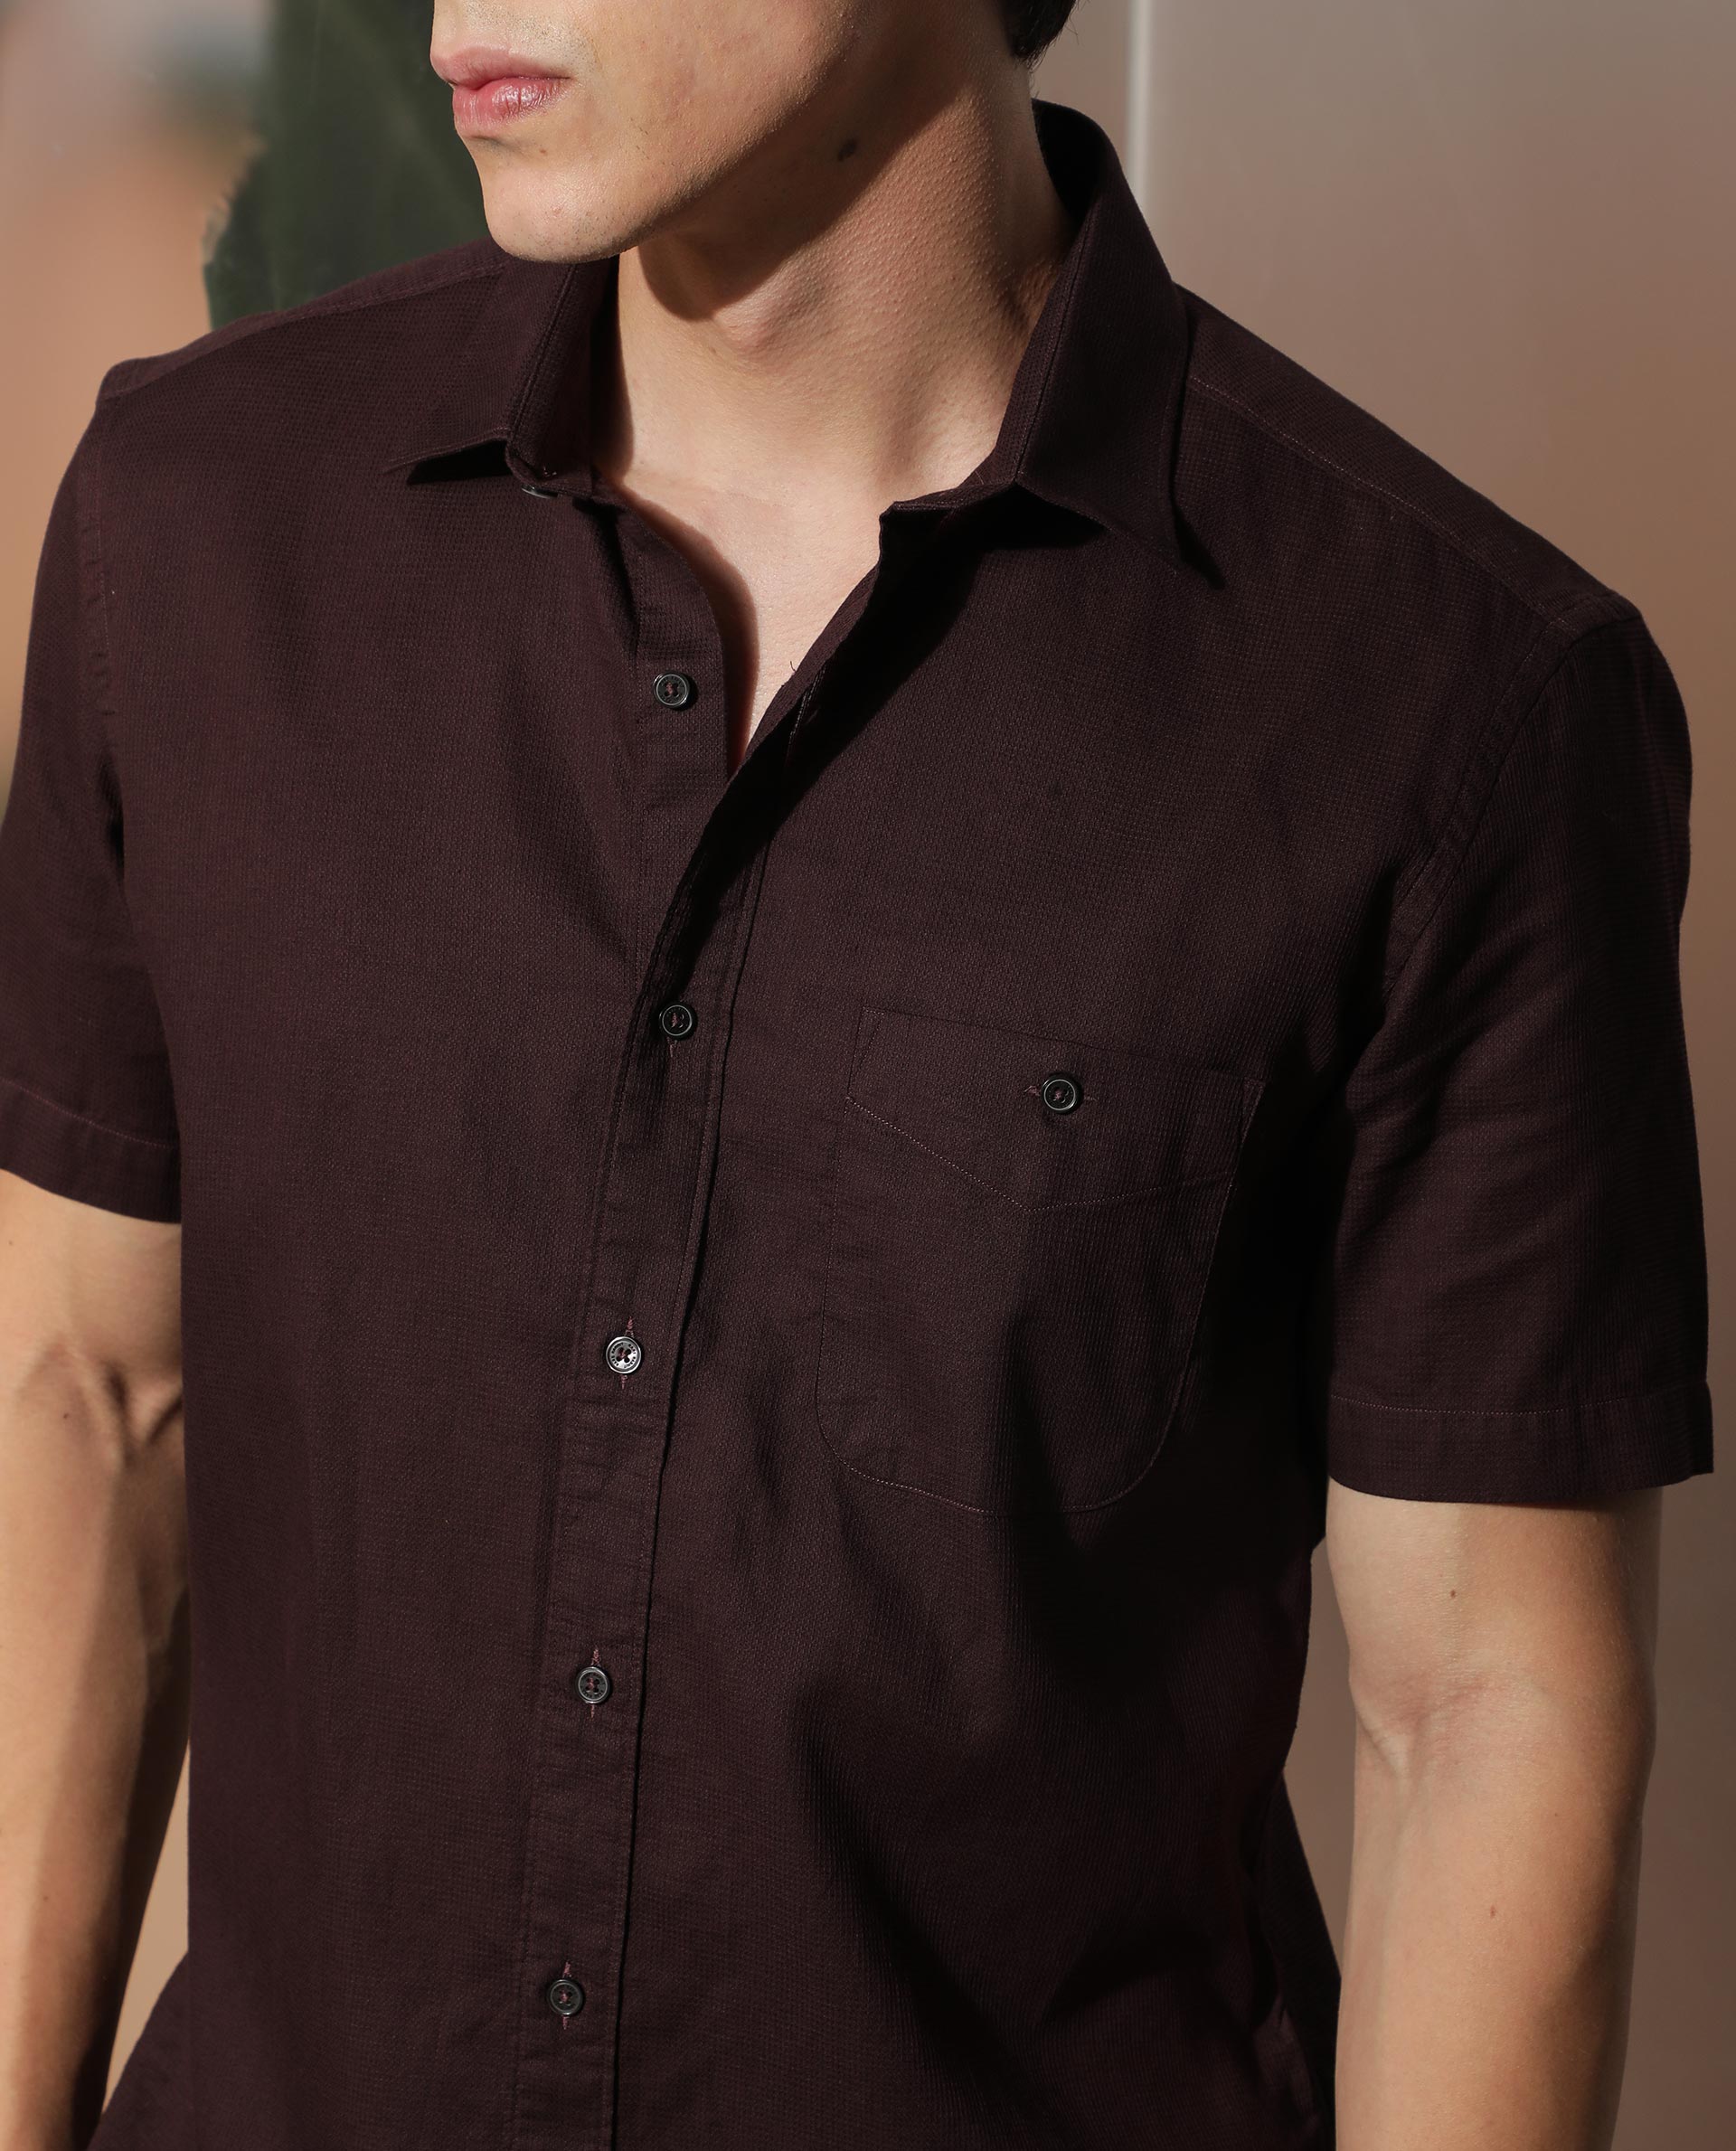 dd fashion Men Solid Formal Maroon Shirt - Buy dd fashion Men Solid Formal Maroon  Shirt Online at Best Prices in India | Flipkart.com